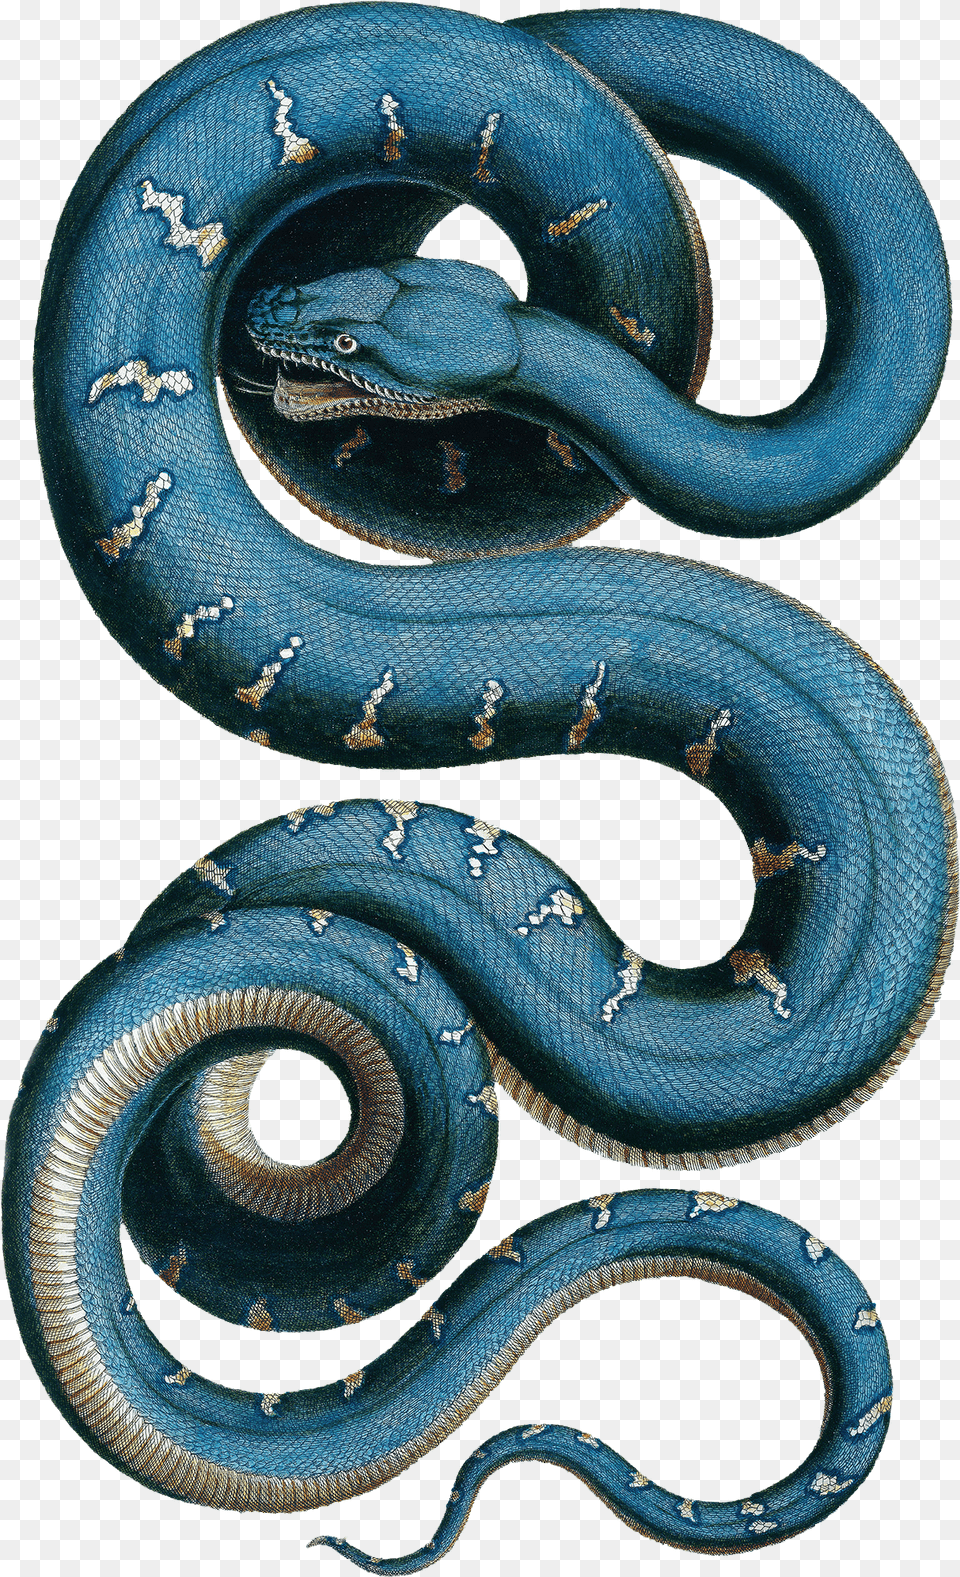 Wall Stickers Of Snake By Natural History Museum Albertus Seba Snake Png